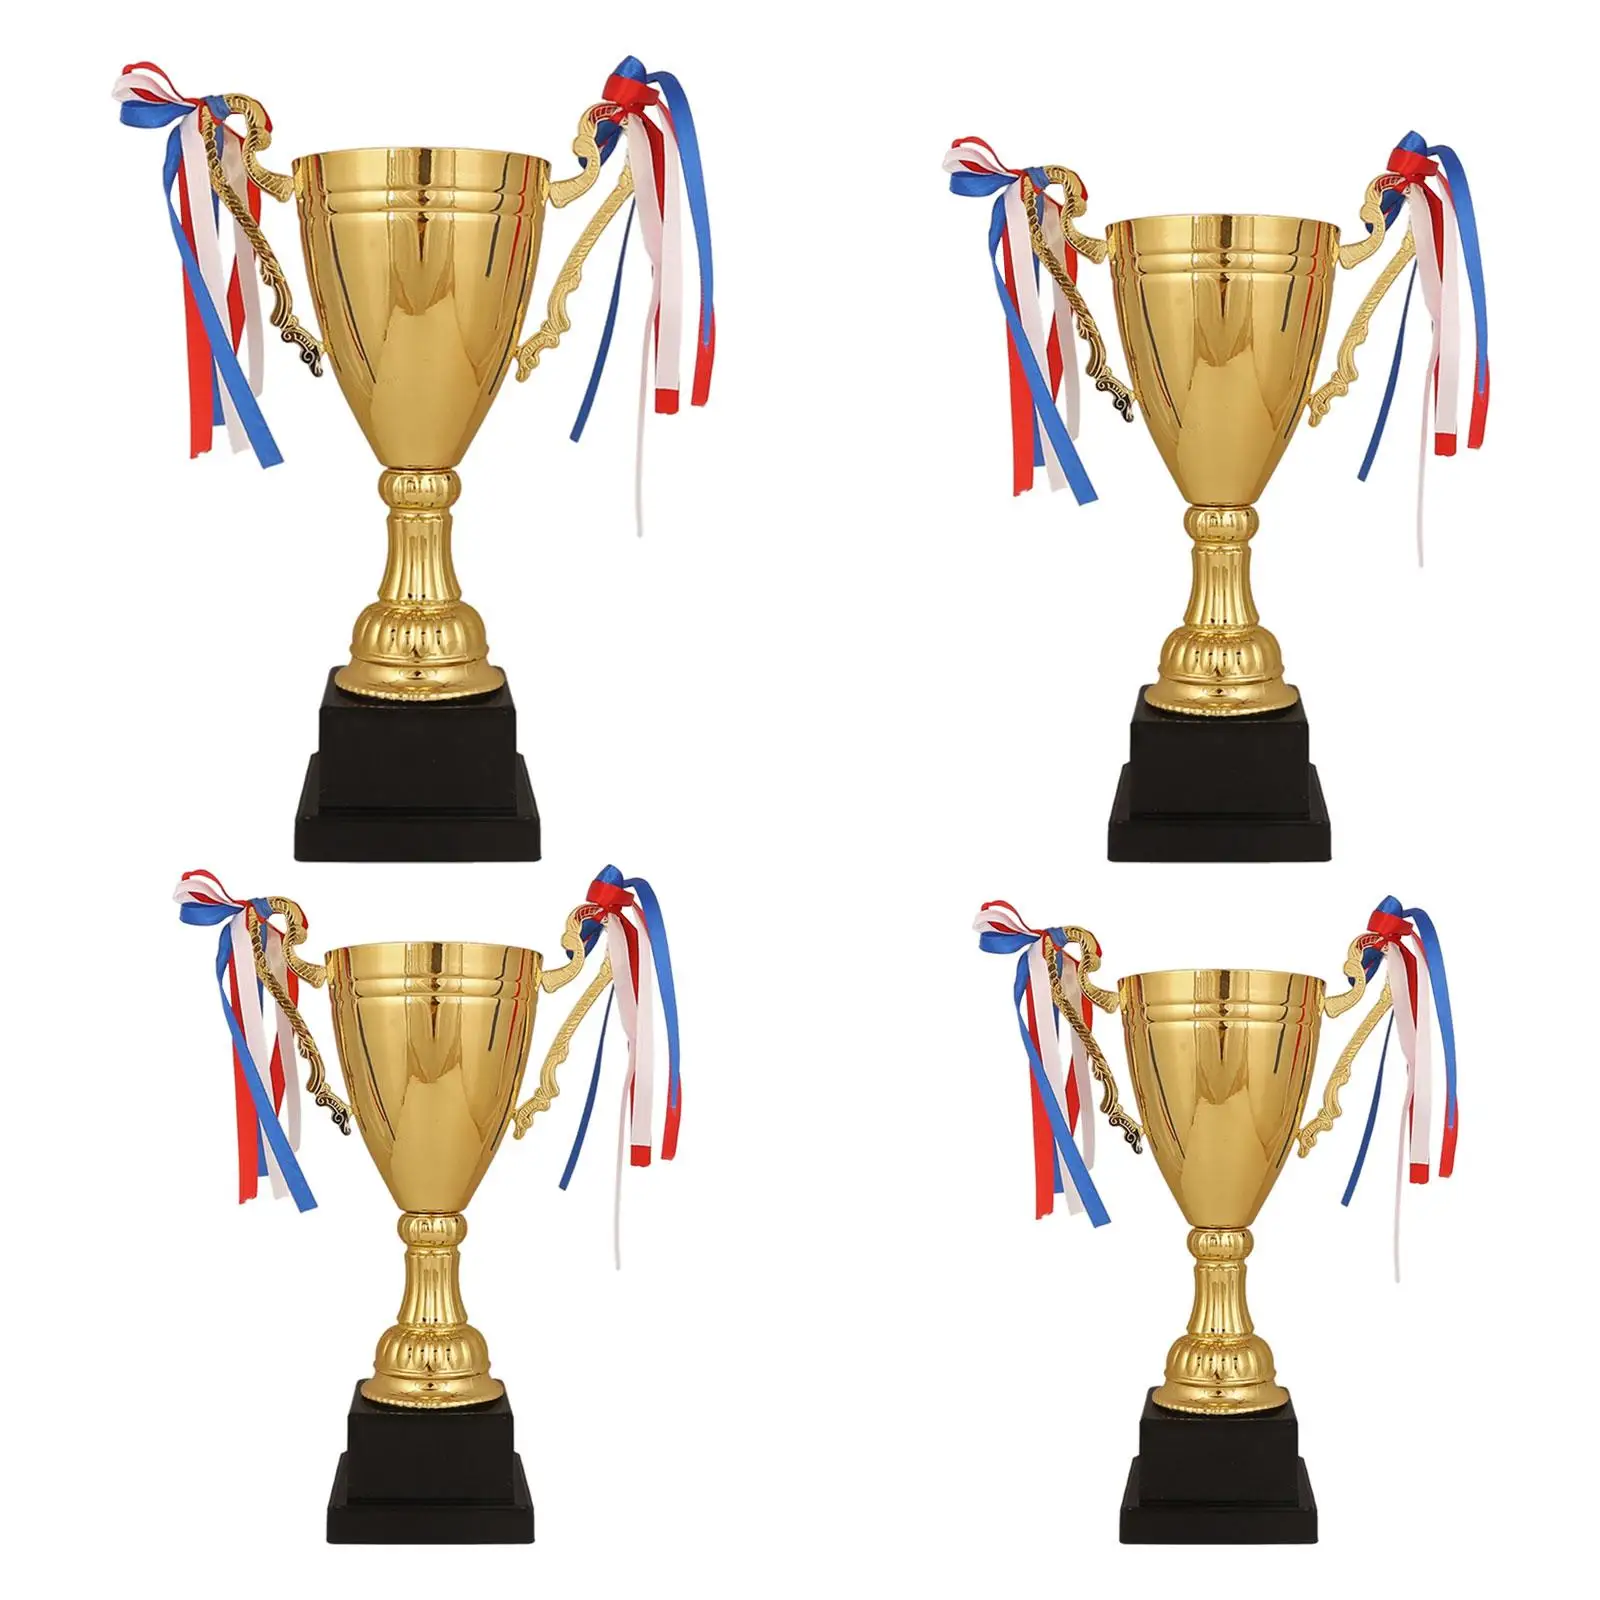 

Golden Trophy Cup Metal Large Gold Trophy Cup for Children Soccer Football League Match Teamwork Award Competition Rewarding